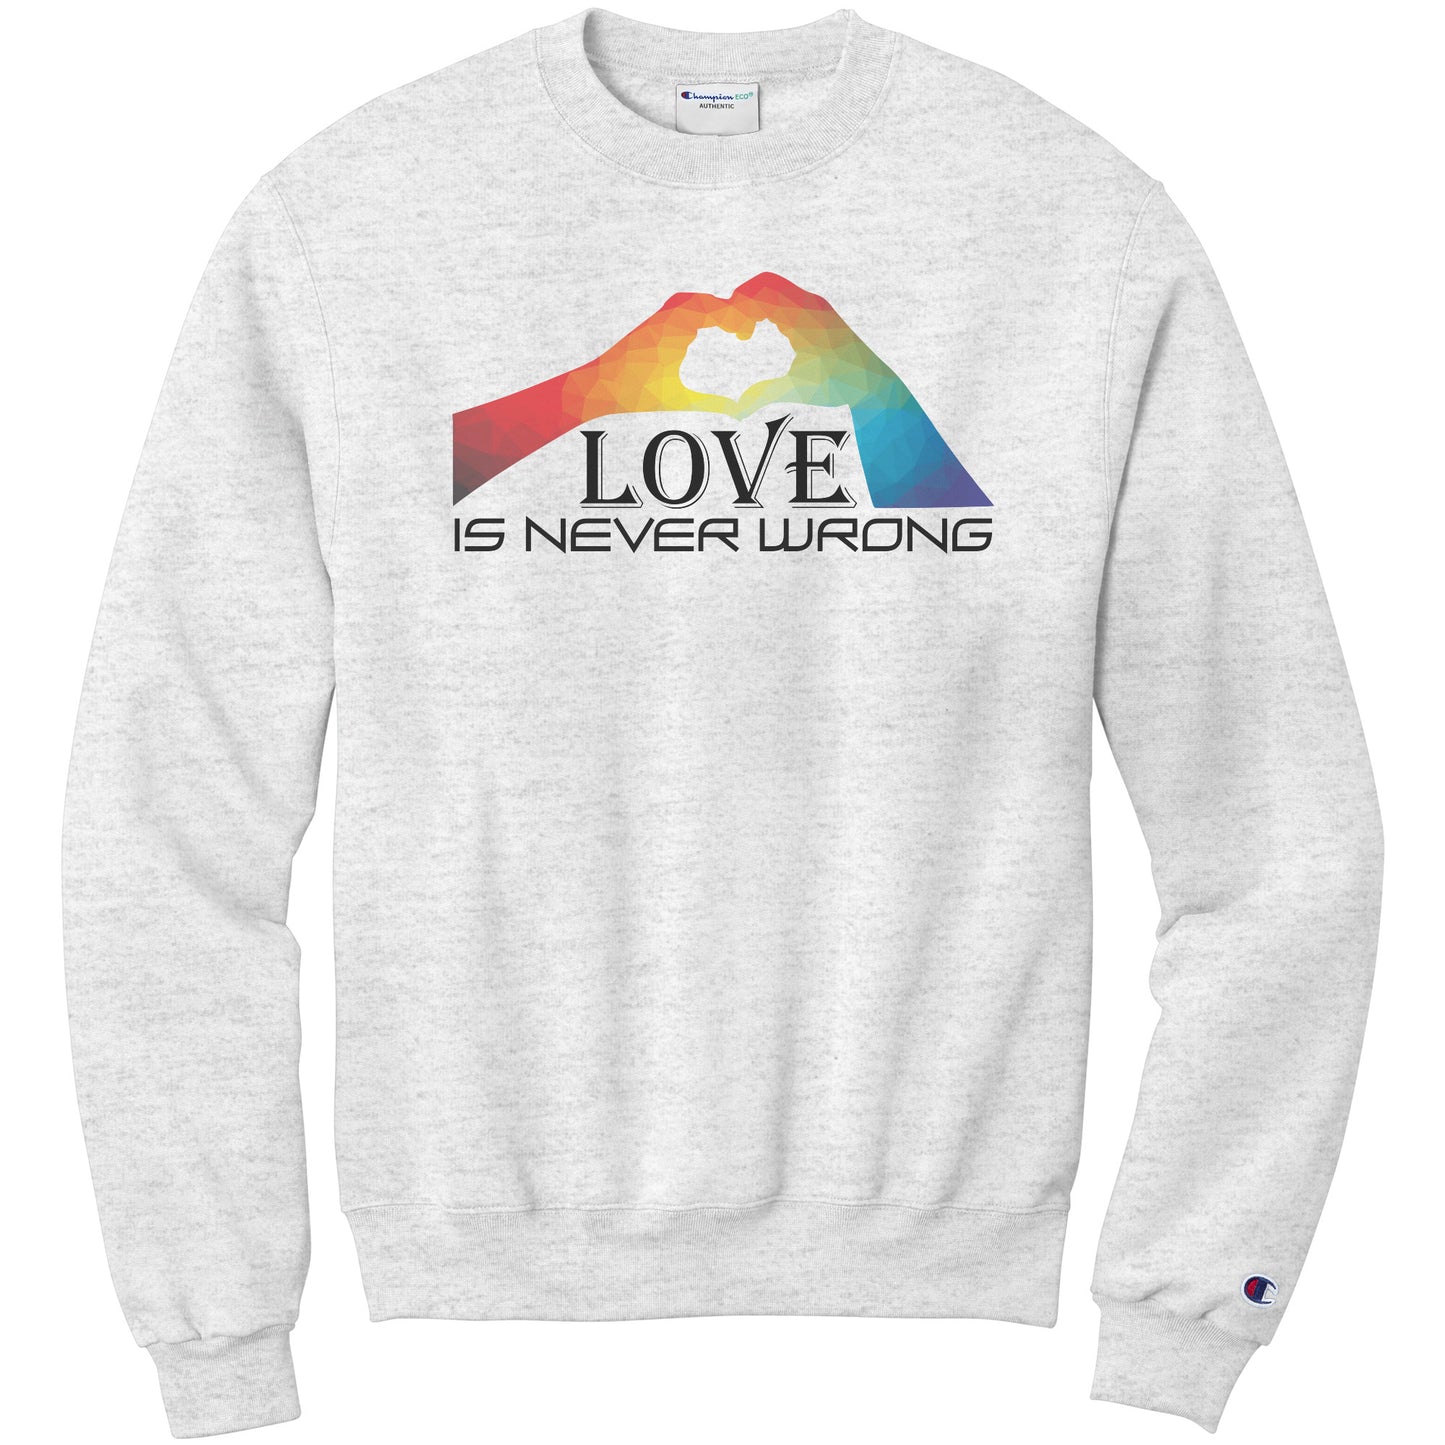 Love Is Never Wrong Raglan, T-Shirt, Sweatshirt